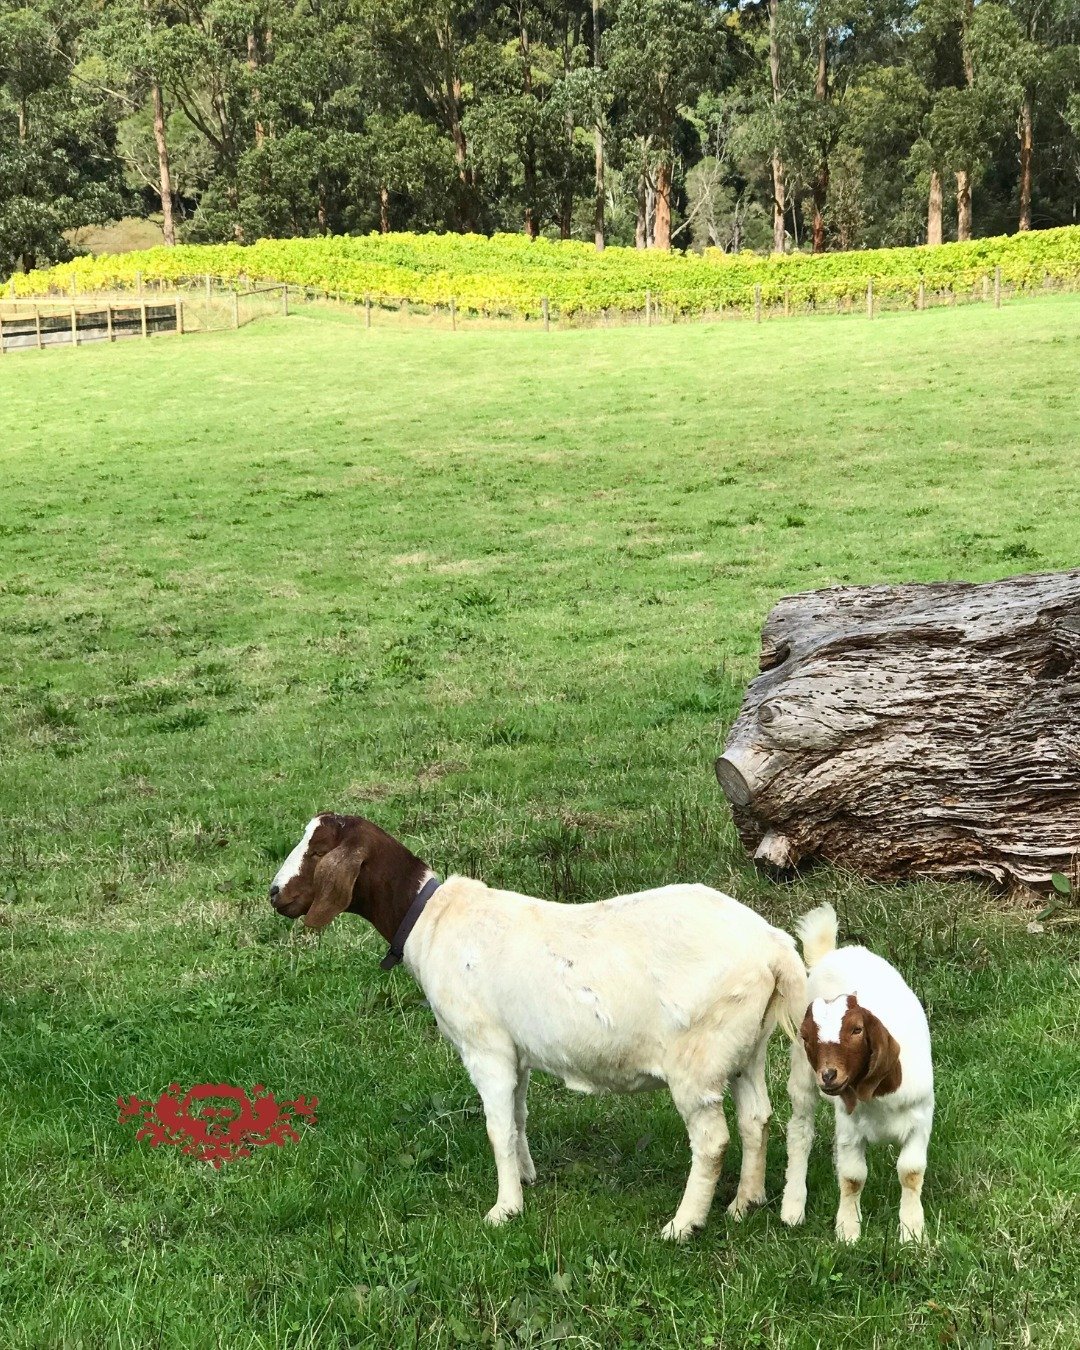 Thelma, Izy &amp; friends 🫶🏽⁠
⁠
#morningtonpeninsula #mpwine #wine #cellardoor #goats⁠